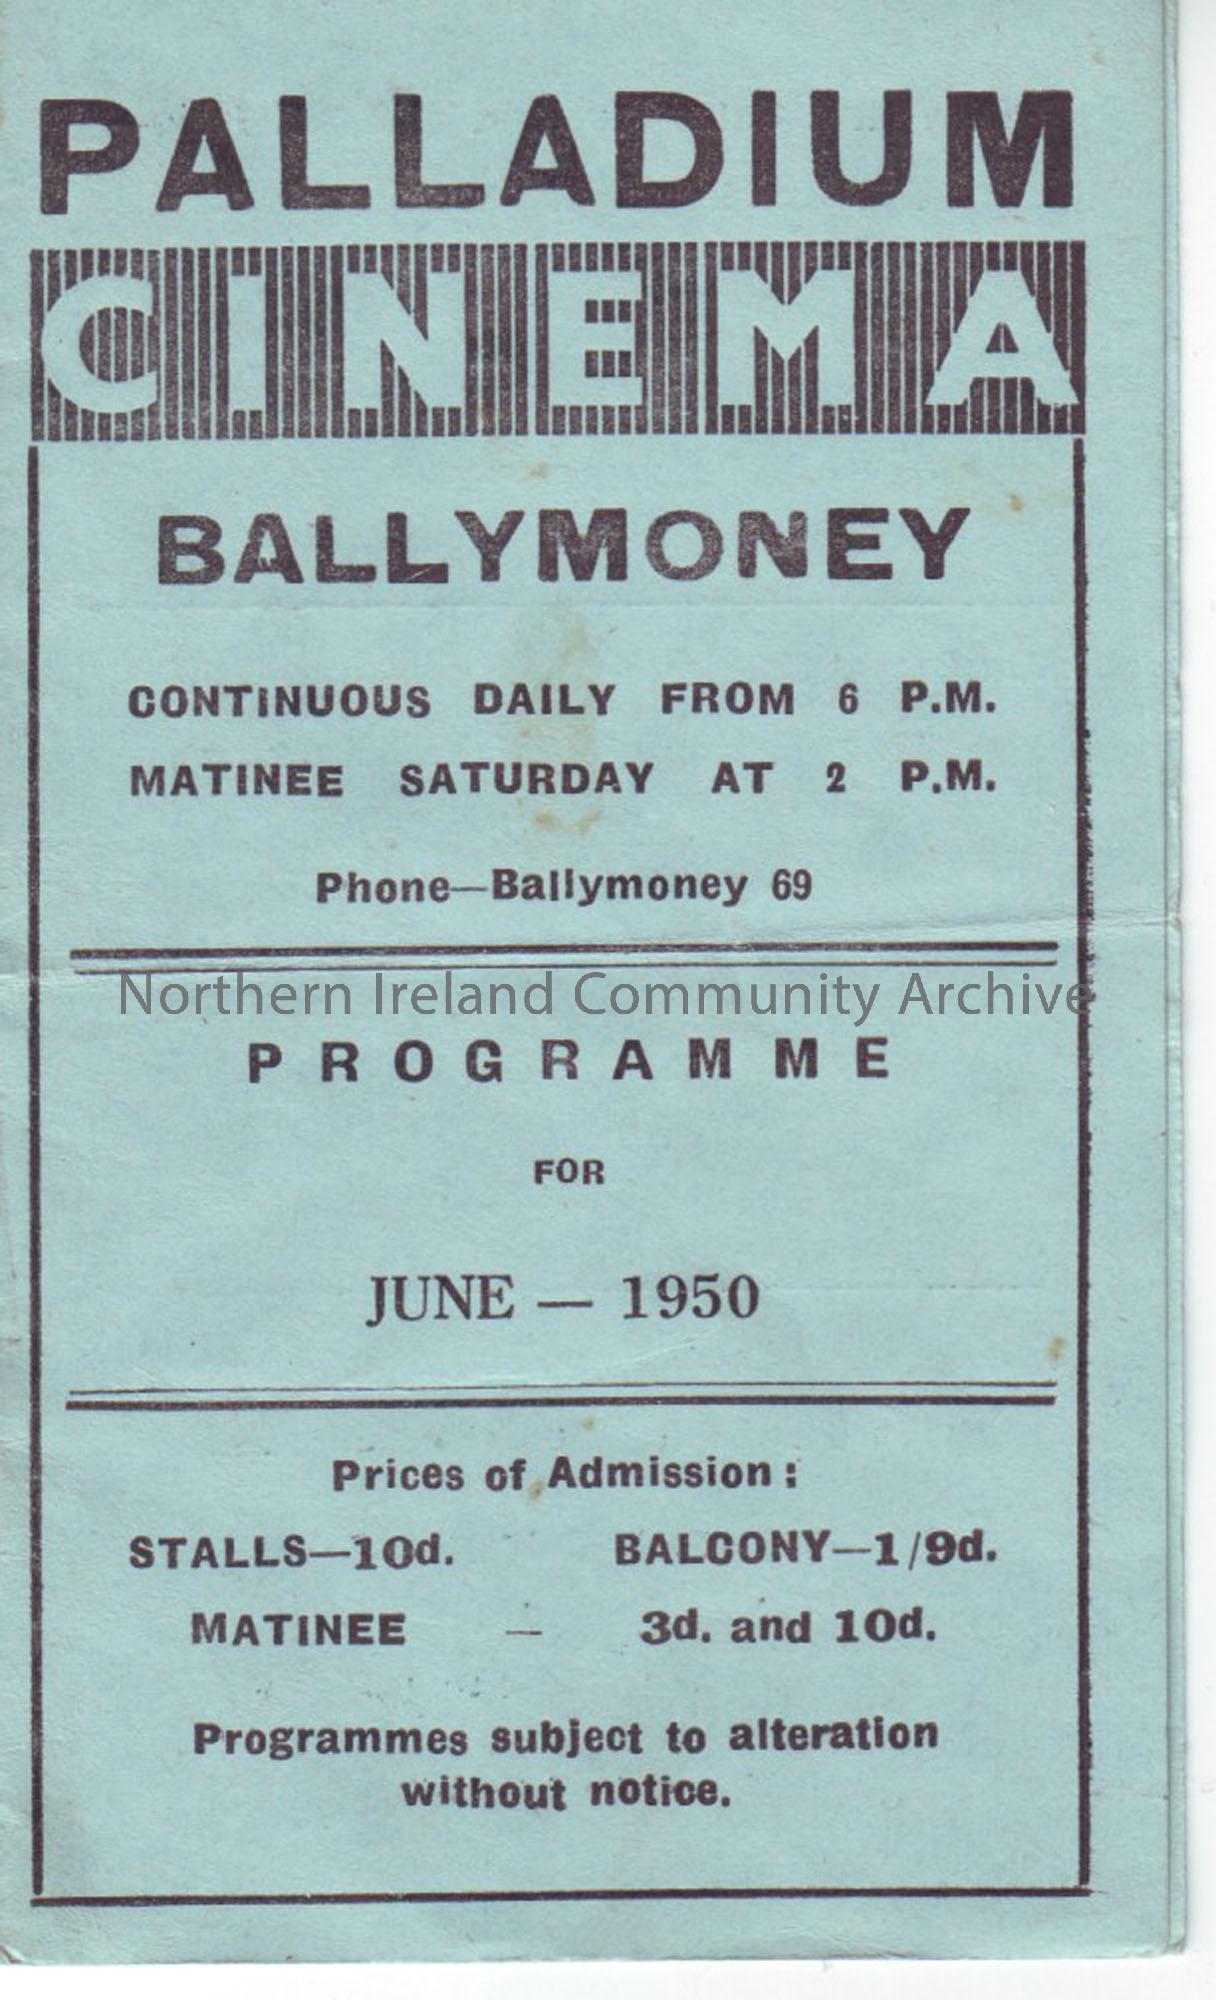 blue monthly programme for Ballymoney Palladium cinema- June 1950